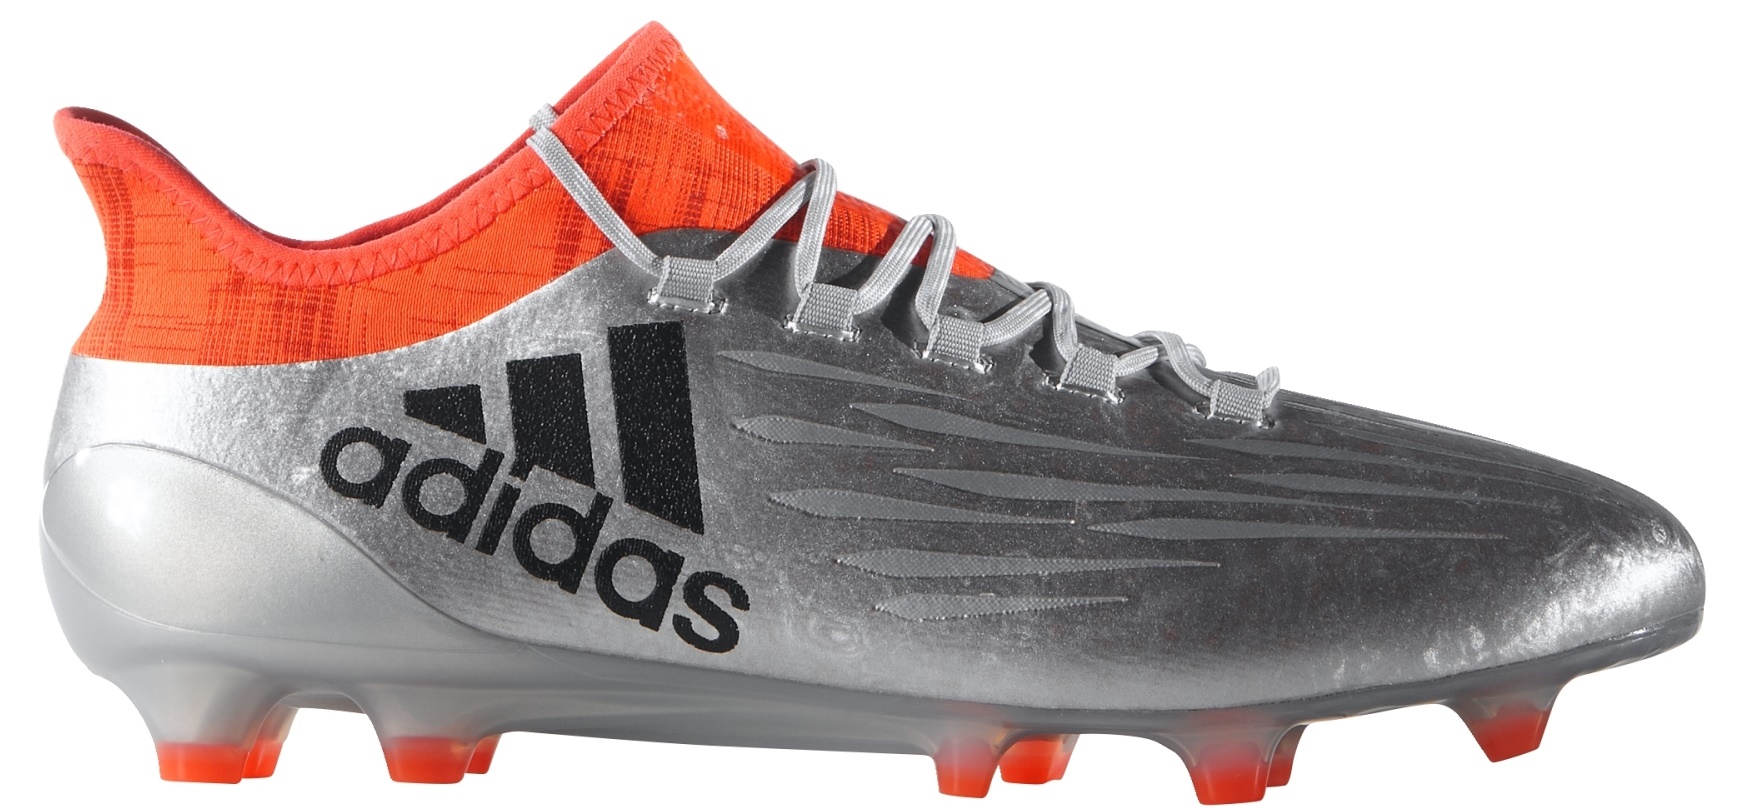 Botas de fútbol Adidas X 16.1 FG colore rojo - Adidas -